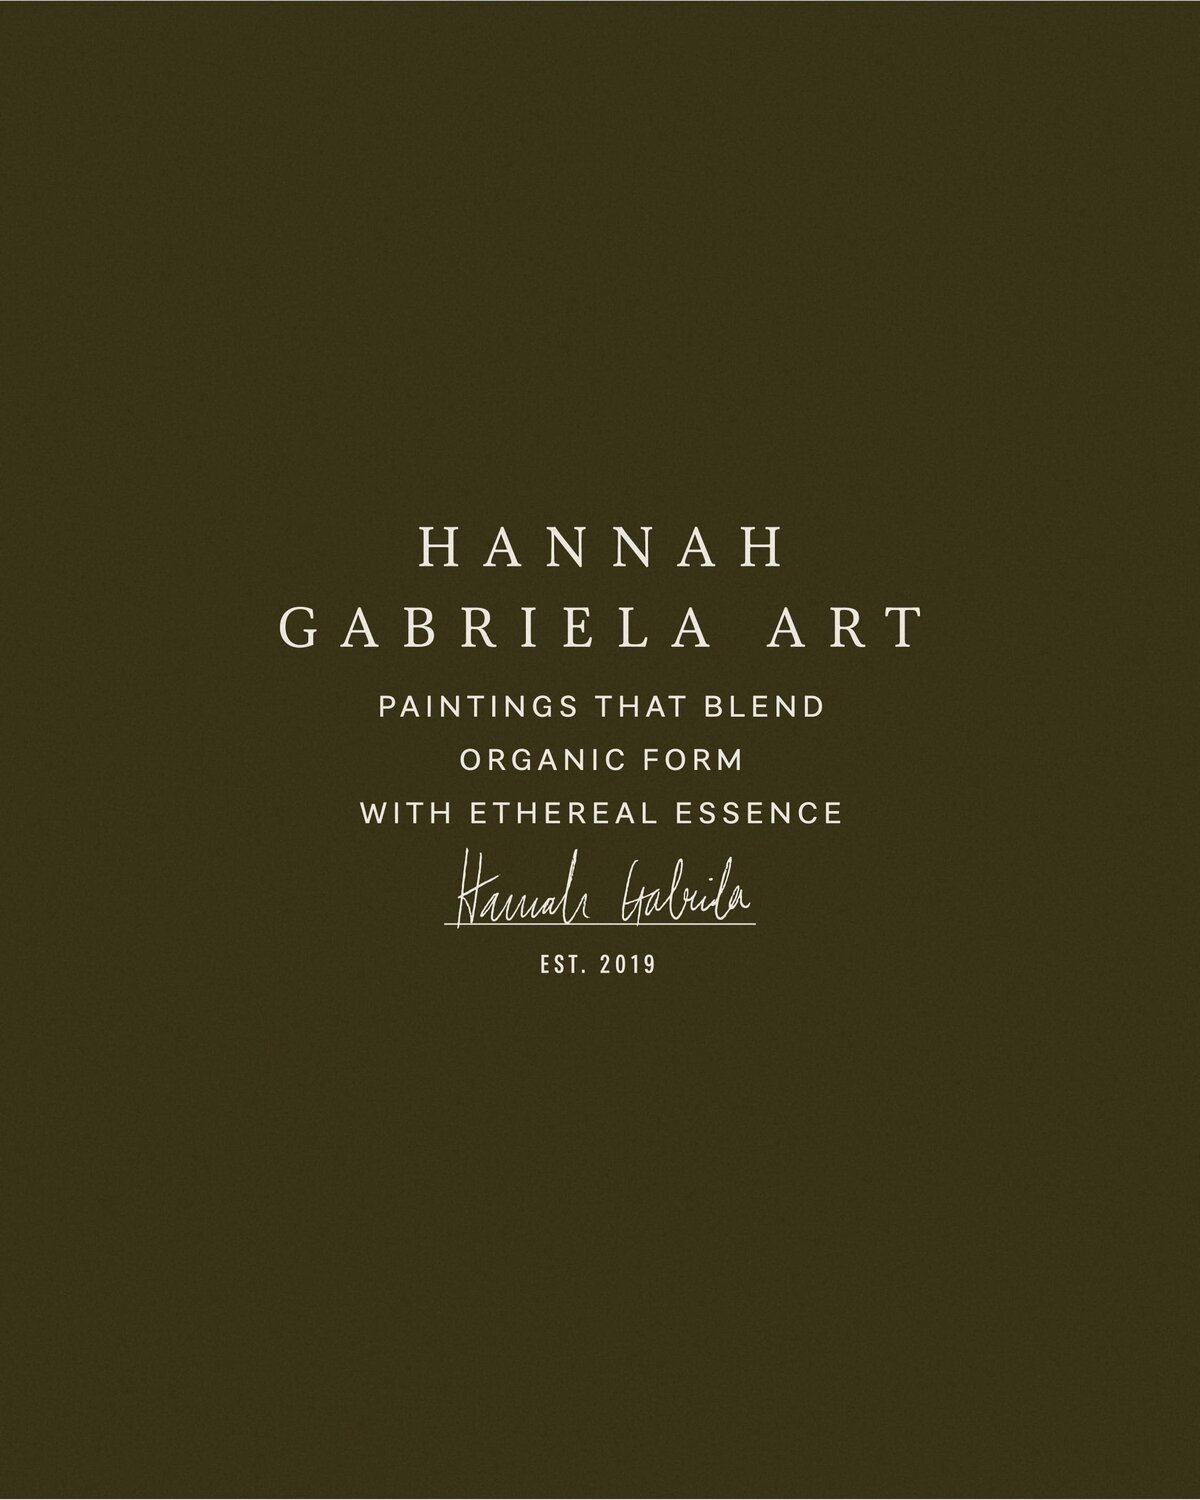 HannahGabrielaArt_LaunchGraphics_Instagram16